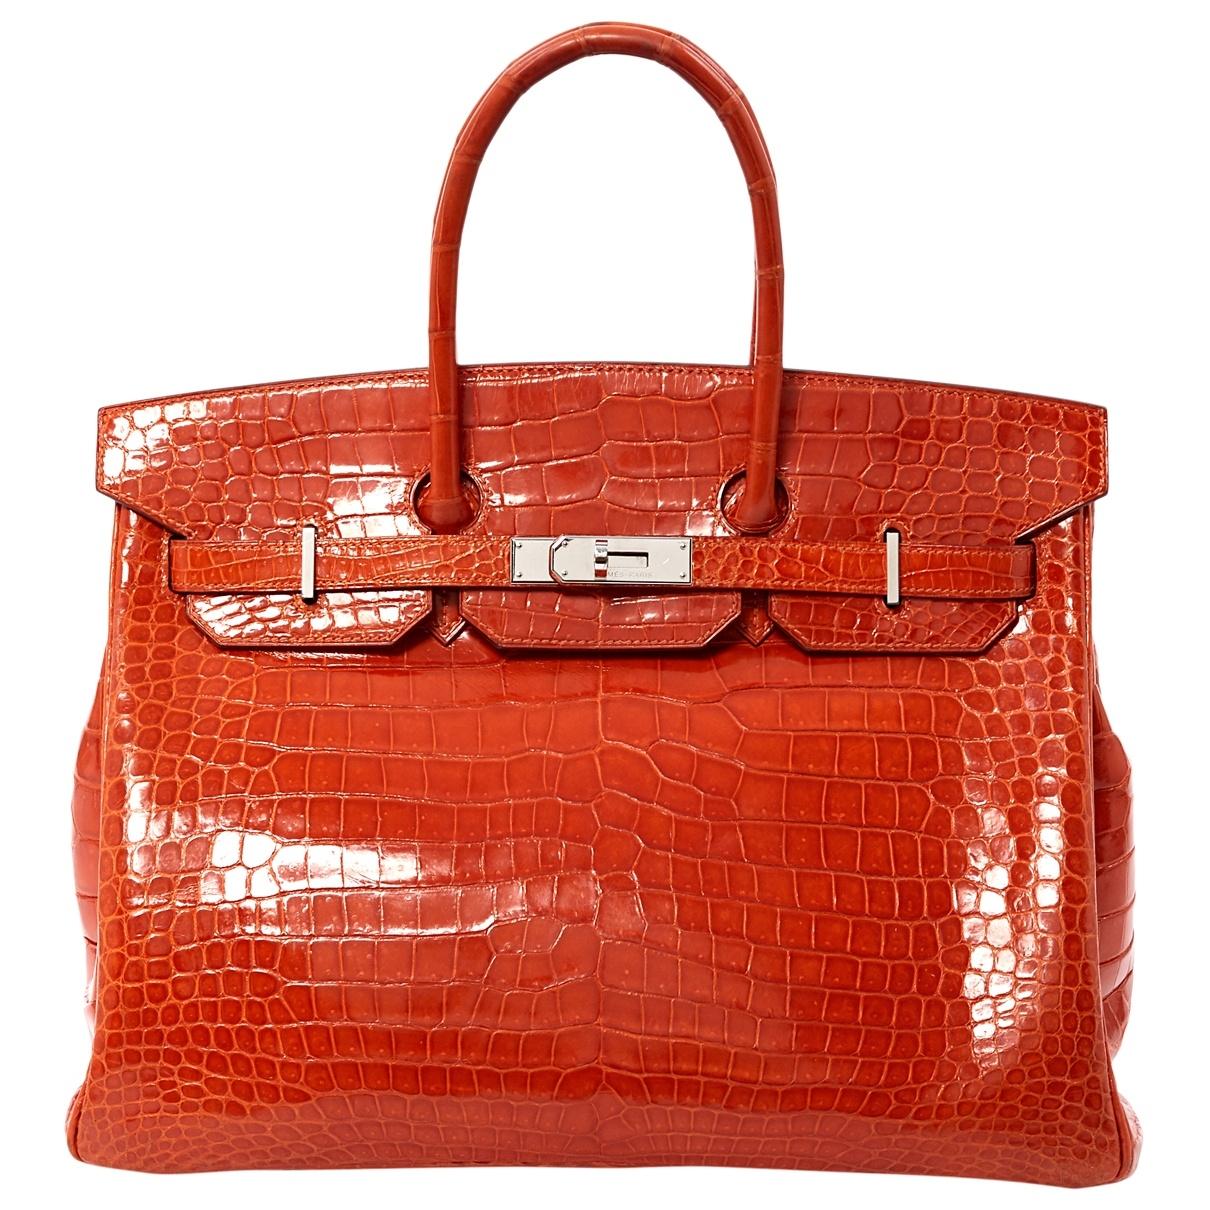 Hermès Birkin 35 Orange Crocodile Handbag in Orange - Lyst